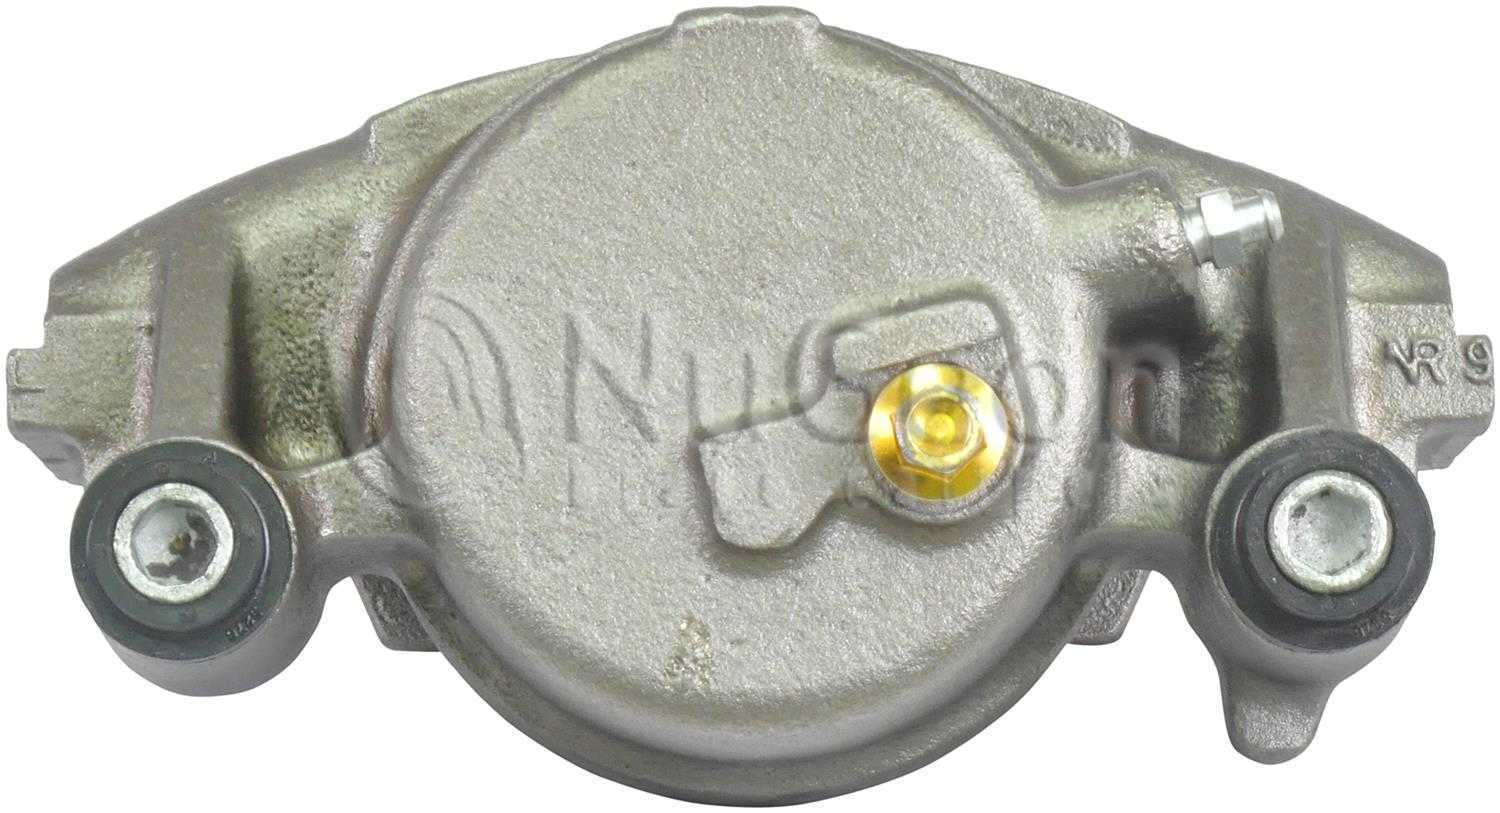 NUGEON - Reman Caliper w/ Installation Hardware - NUN 97-17268B